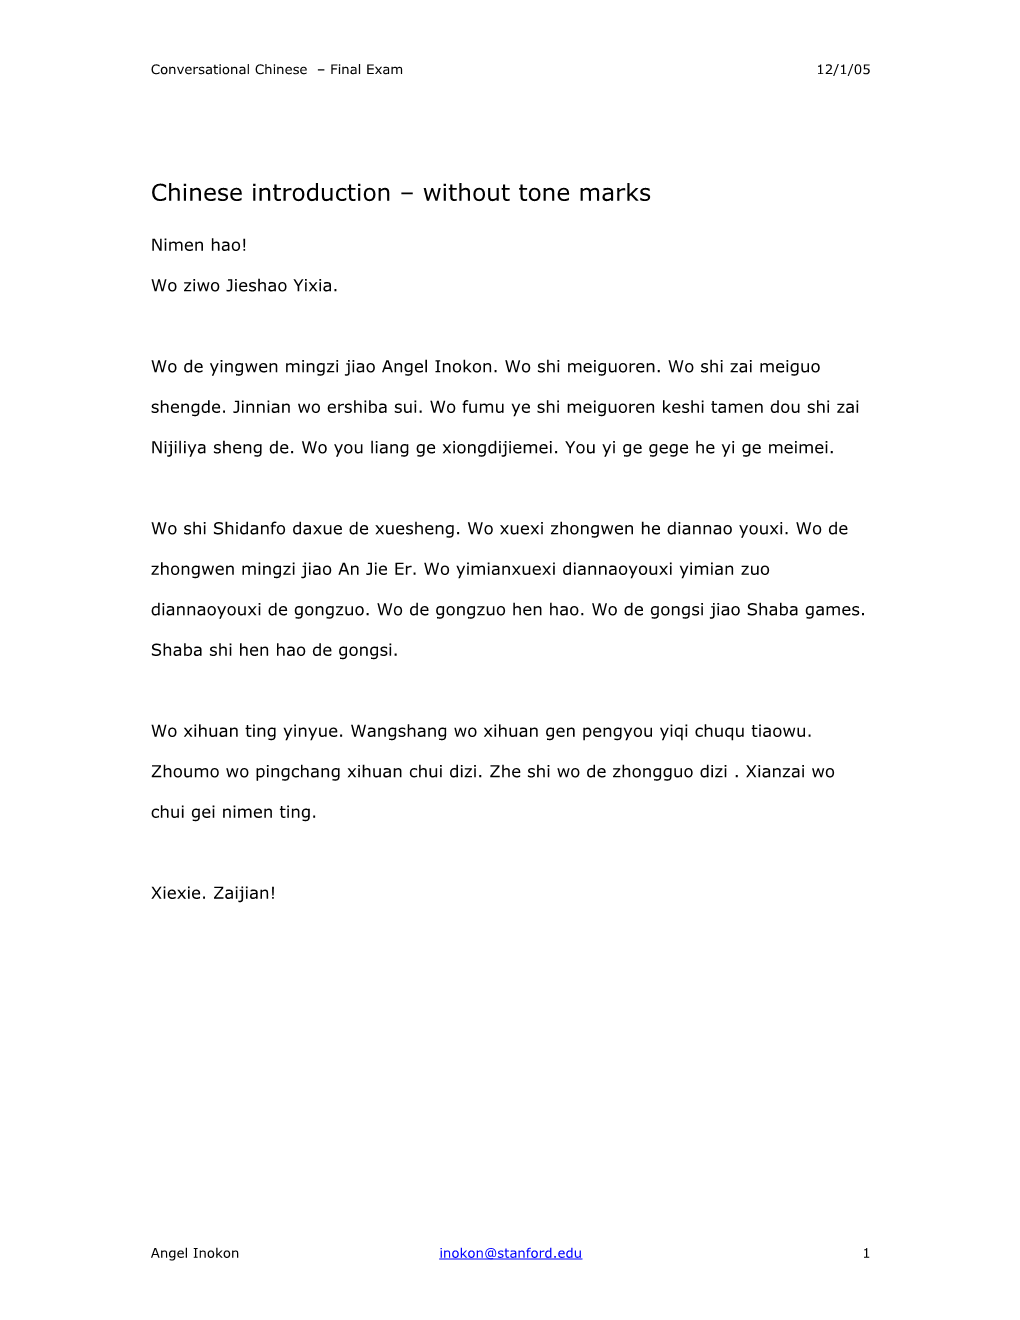 Conversational Chinese Final Exam 12/1/05